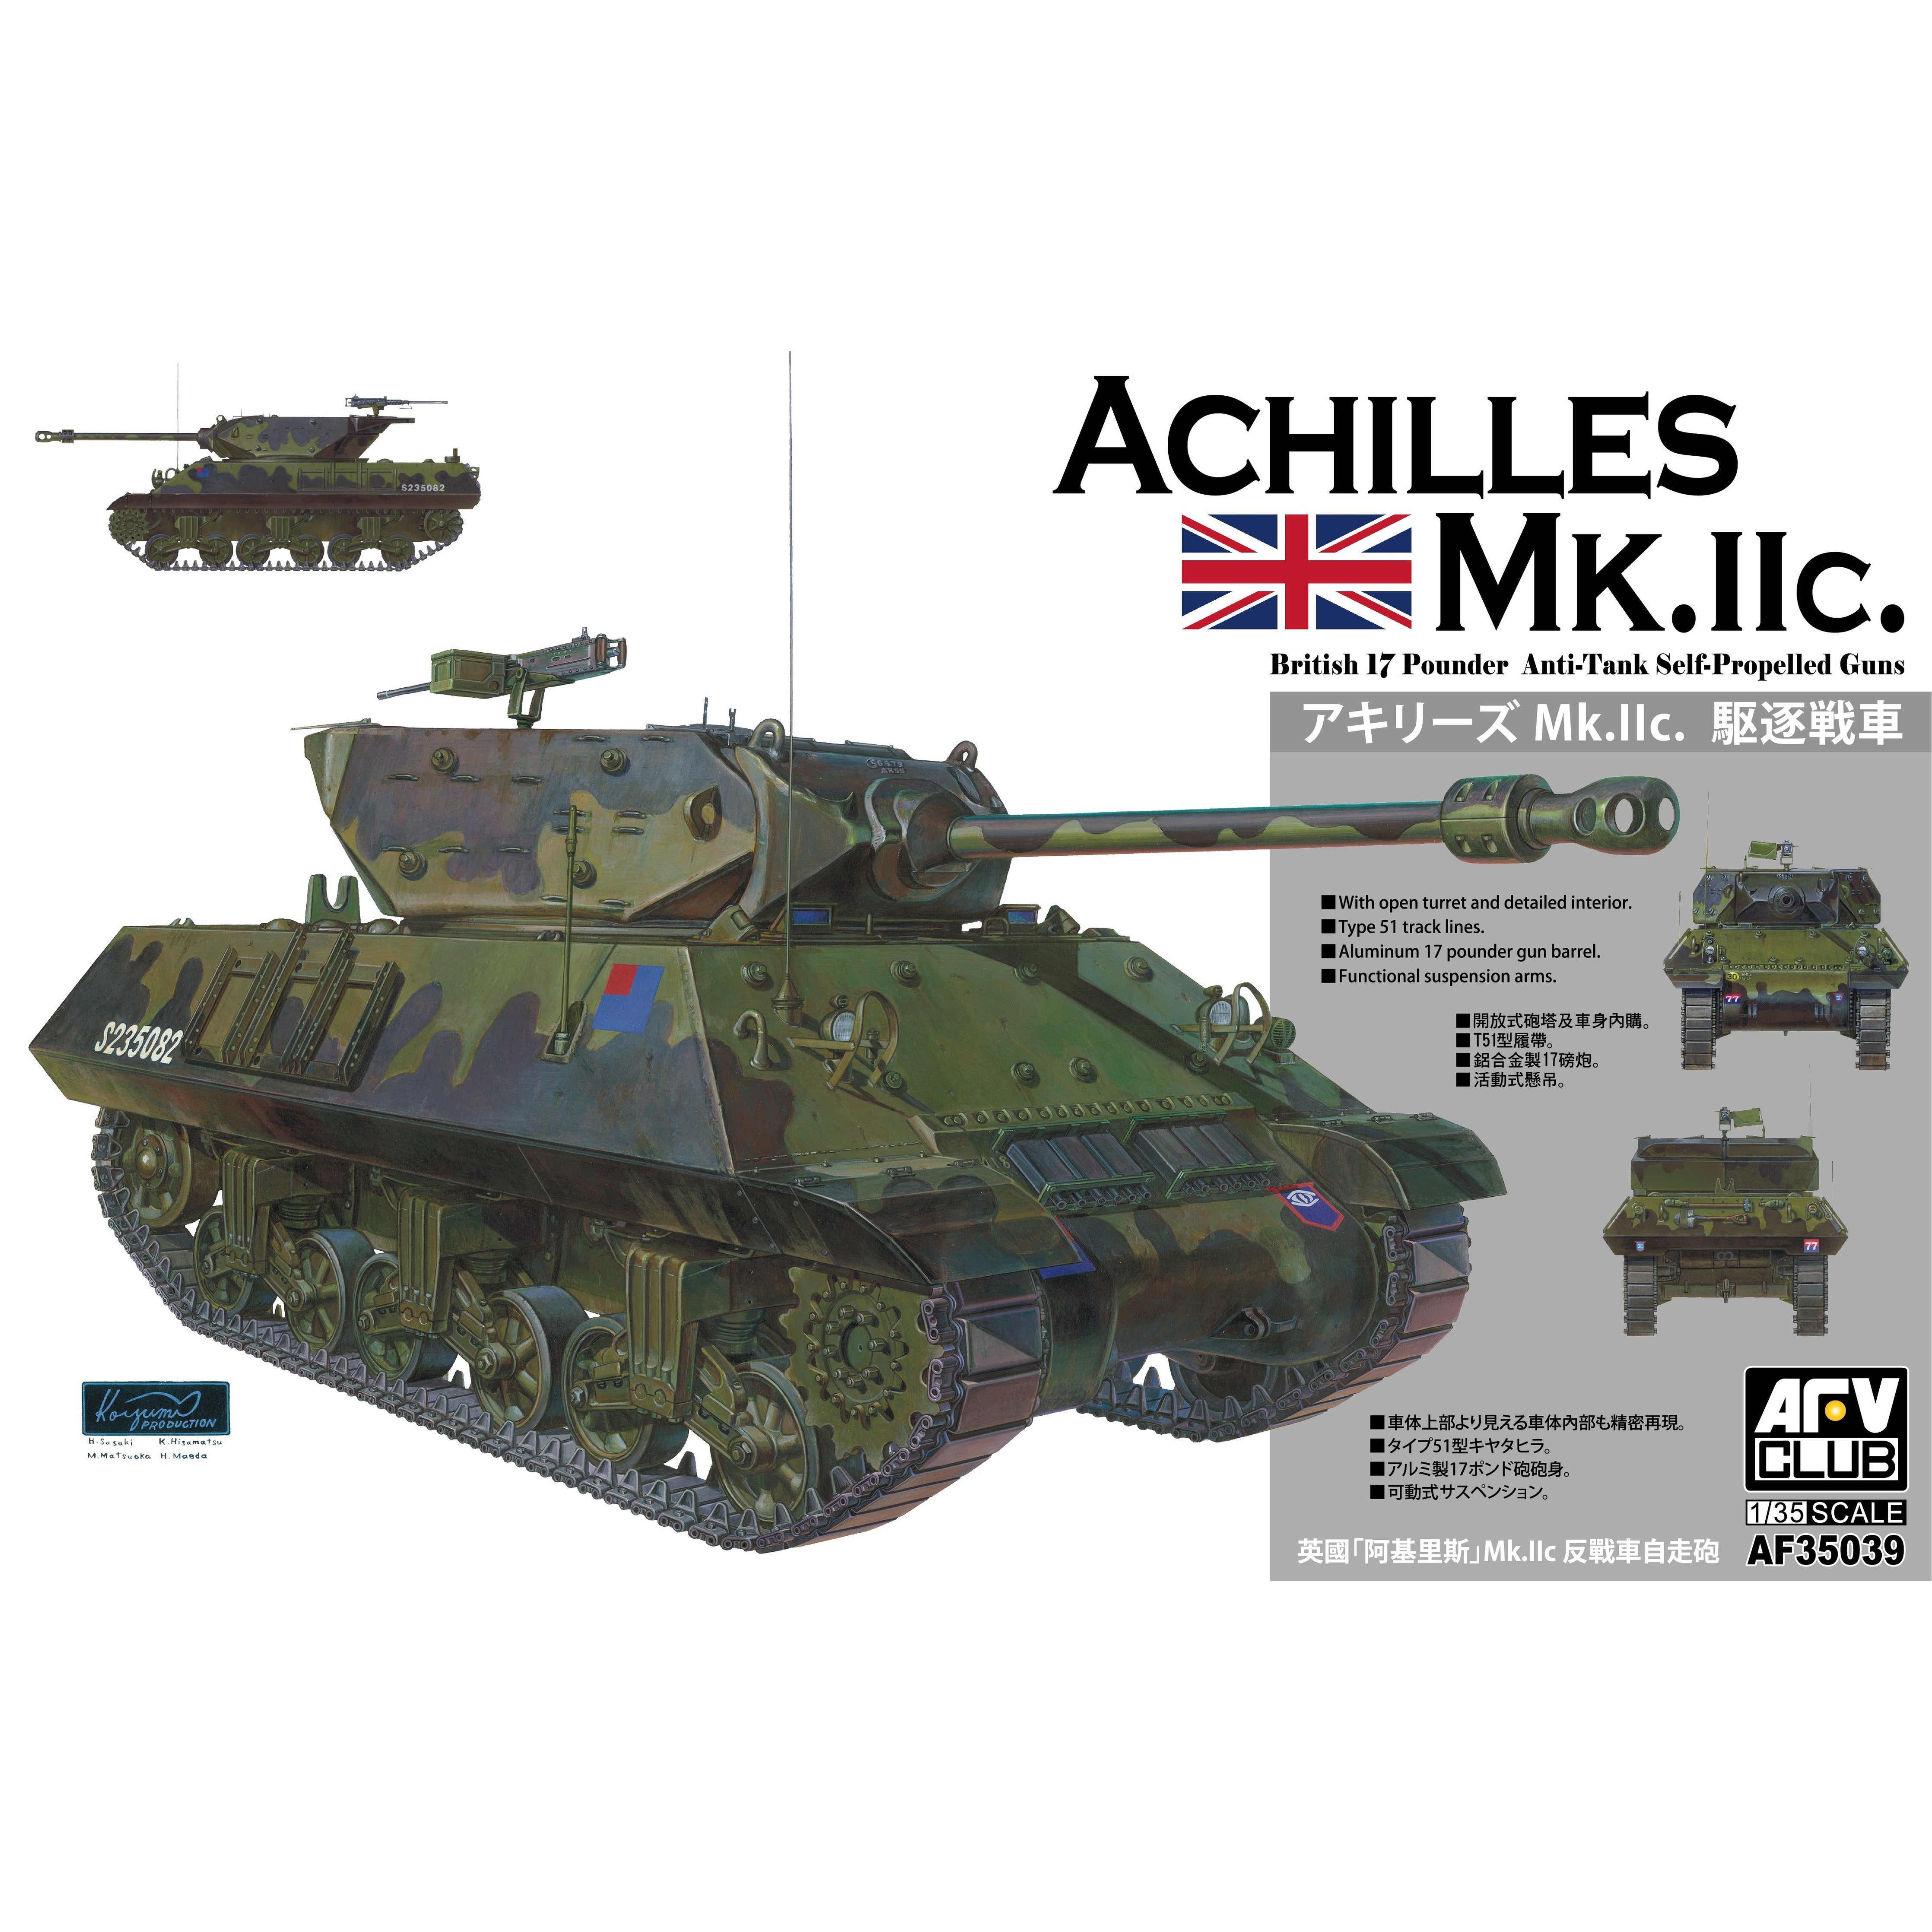 Achilles MK IIc British 17 Pounder Anti-Tank Self-Propelled Gun 1/35 #35039 by AFV Club